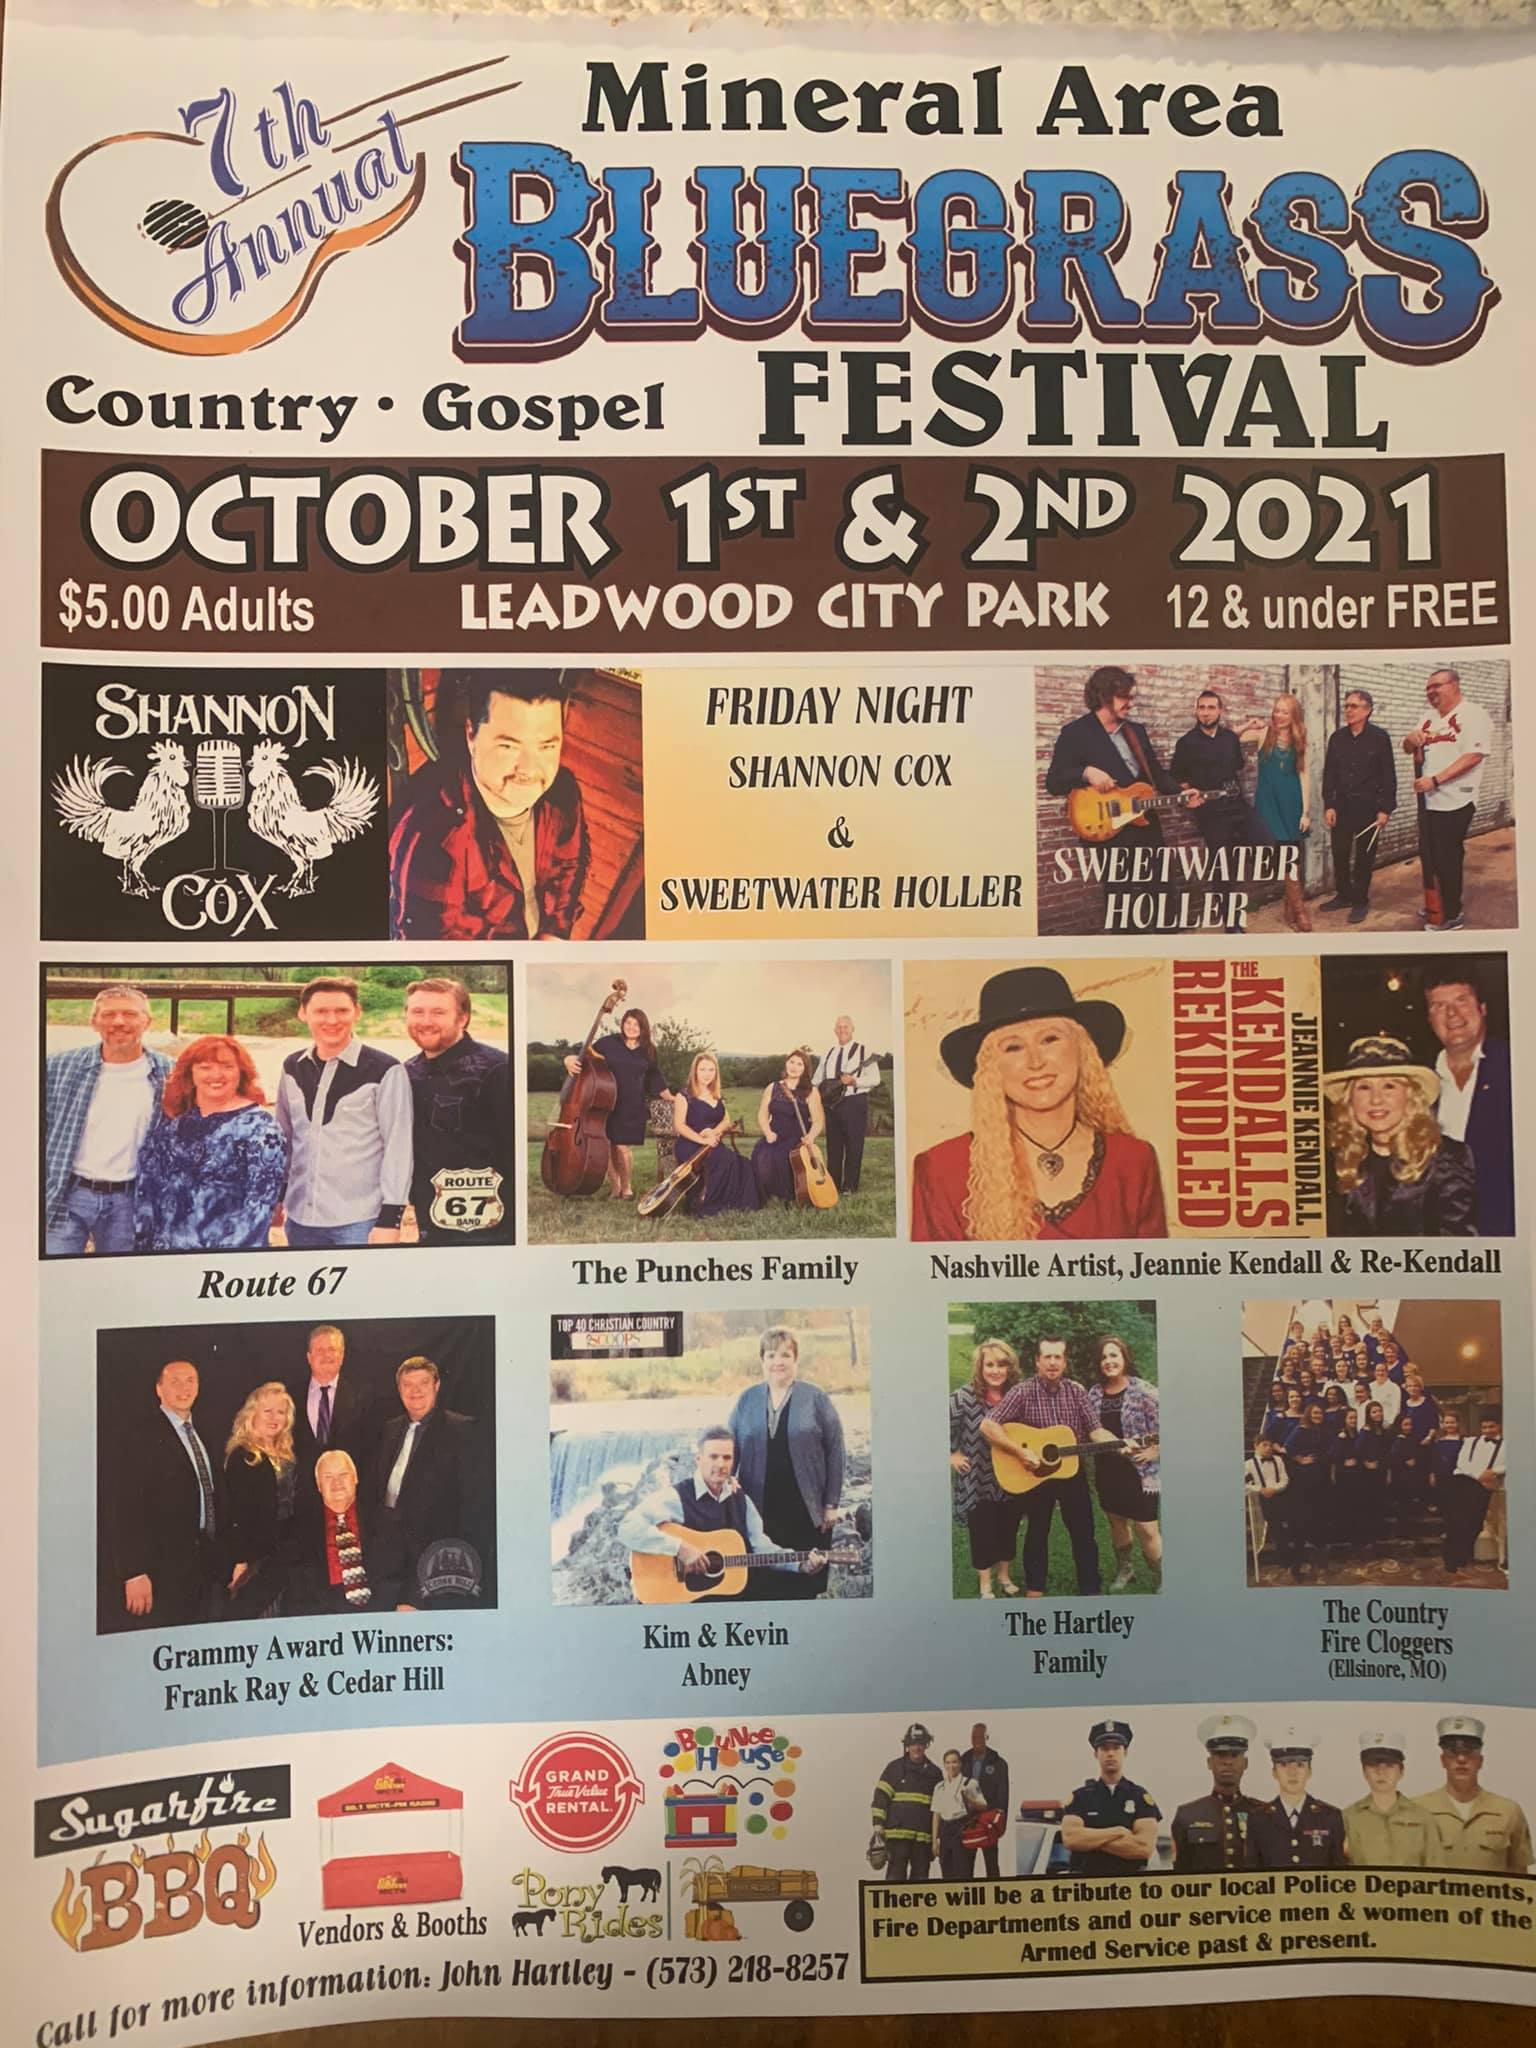 Bluegrass Festival Coming Soon